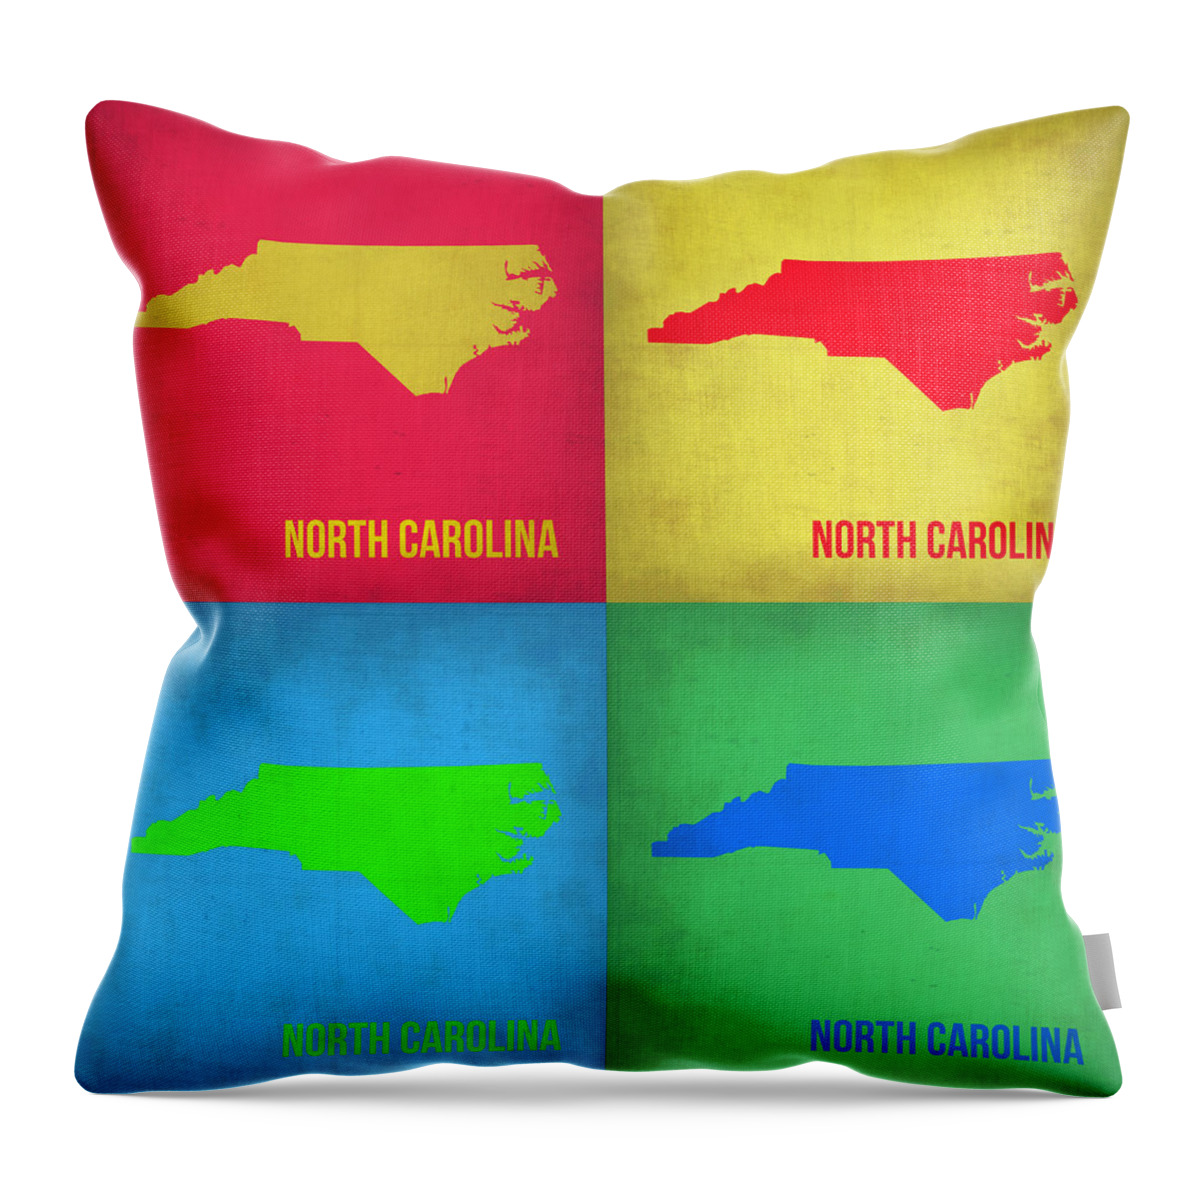 North Carolina Throw Pillow featuring the painting North Carolina Pop Art Map 1 by Naxart Studio